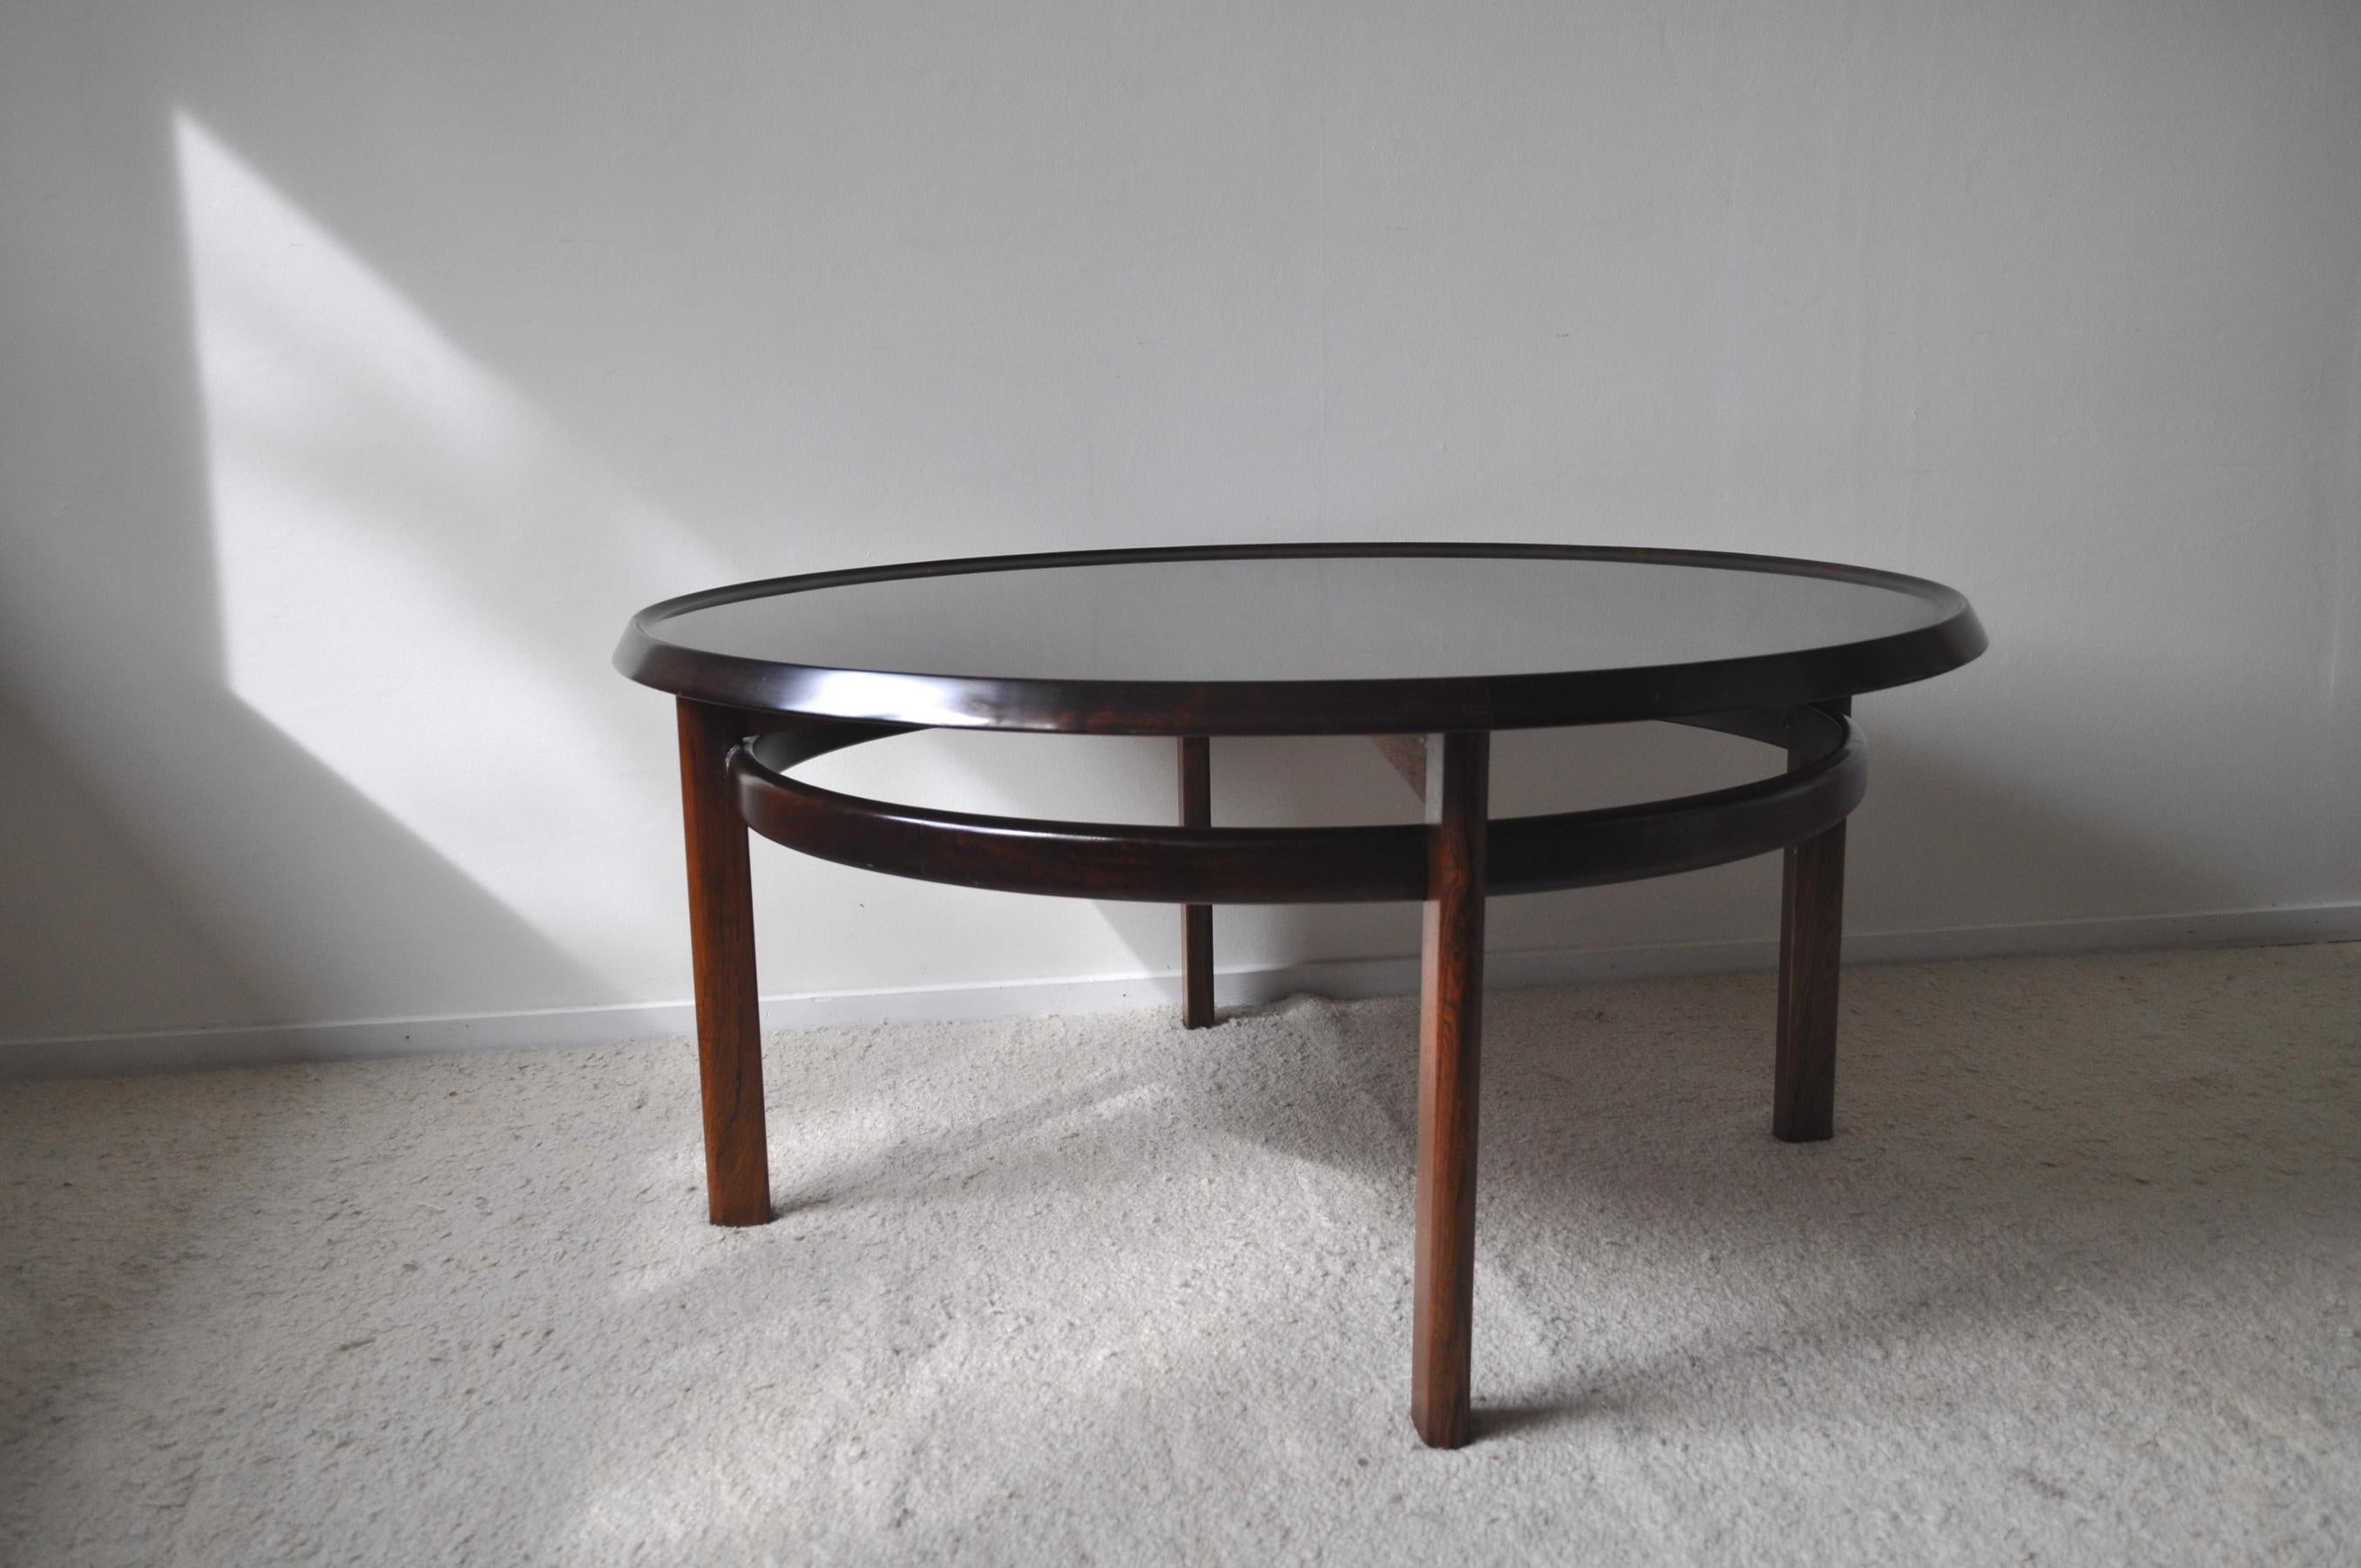 Large round coffee table in rosewood designed by Norwegian designer Torbjørn Afdal. Produced by Haug Snekkeri, Bruksbo.

Torbjørn Afdal (1917-1999) began as a designer at Bruksbo Tegnekontor in 1946. He was one of the most prolific furniture